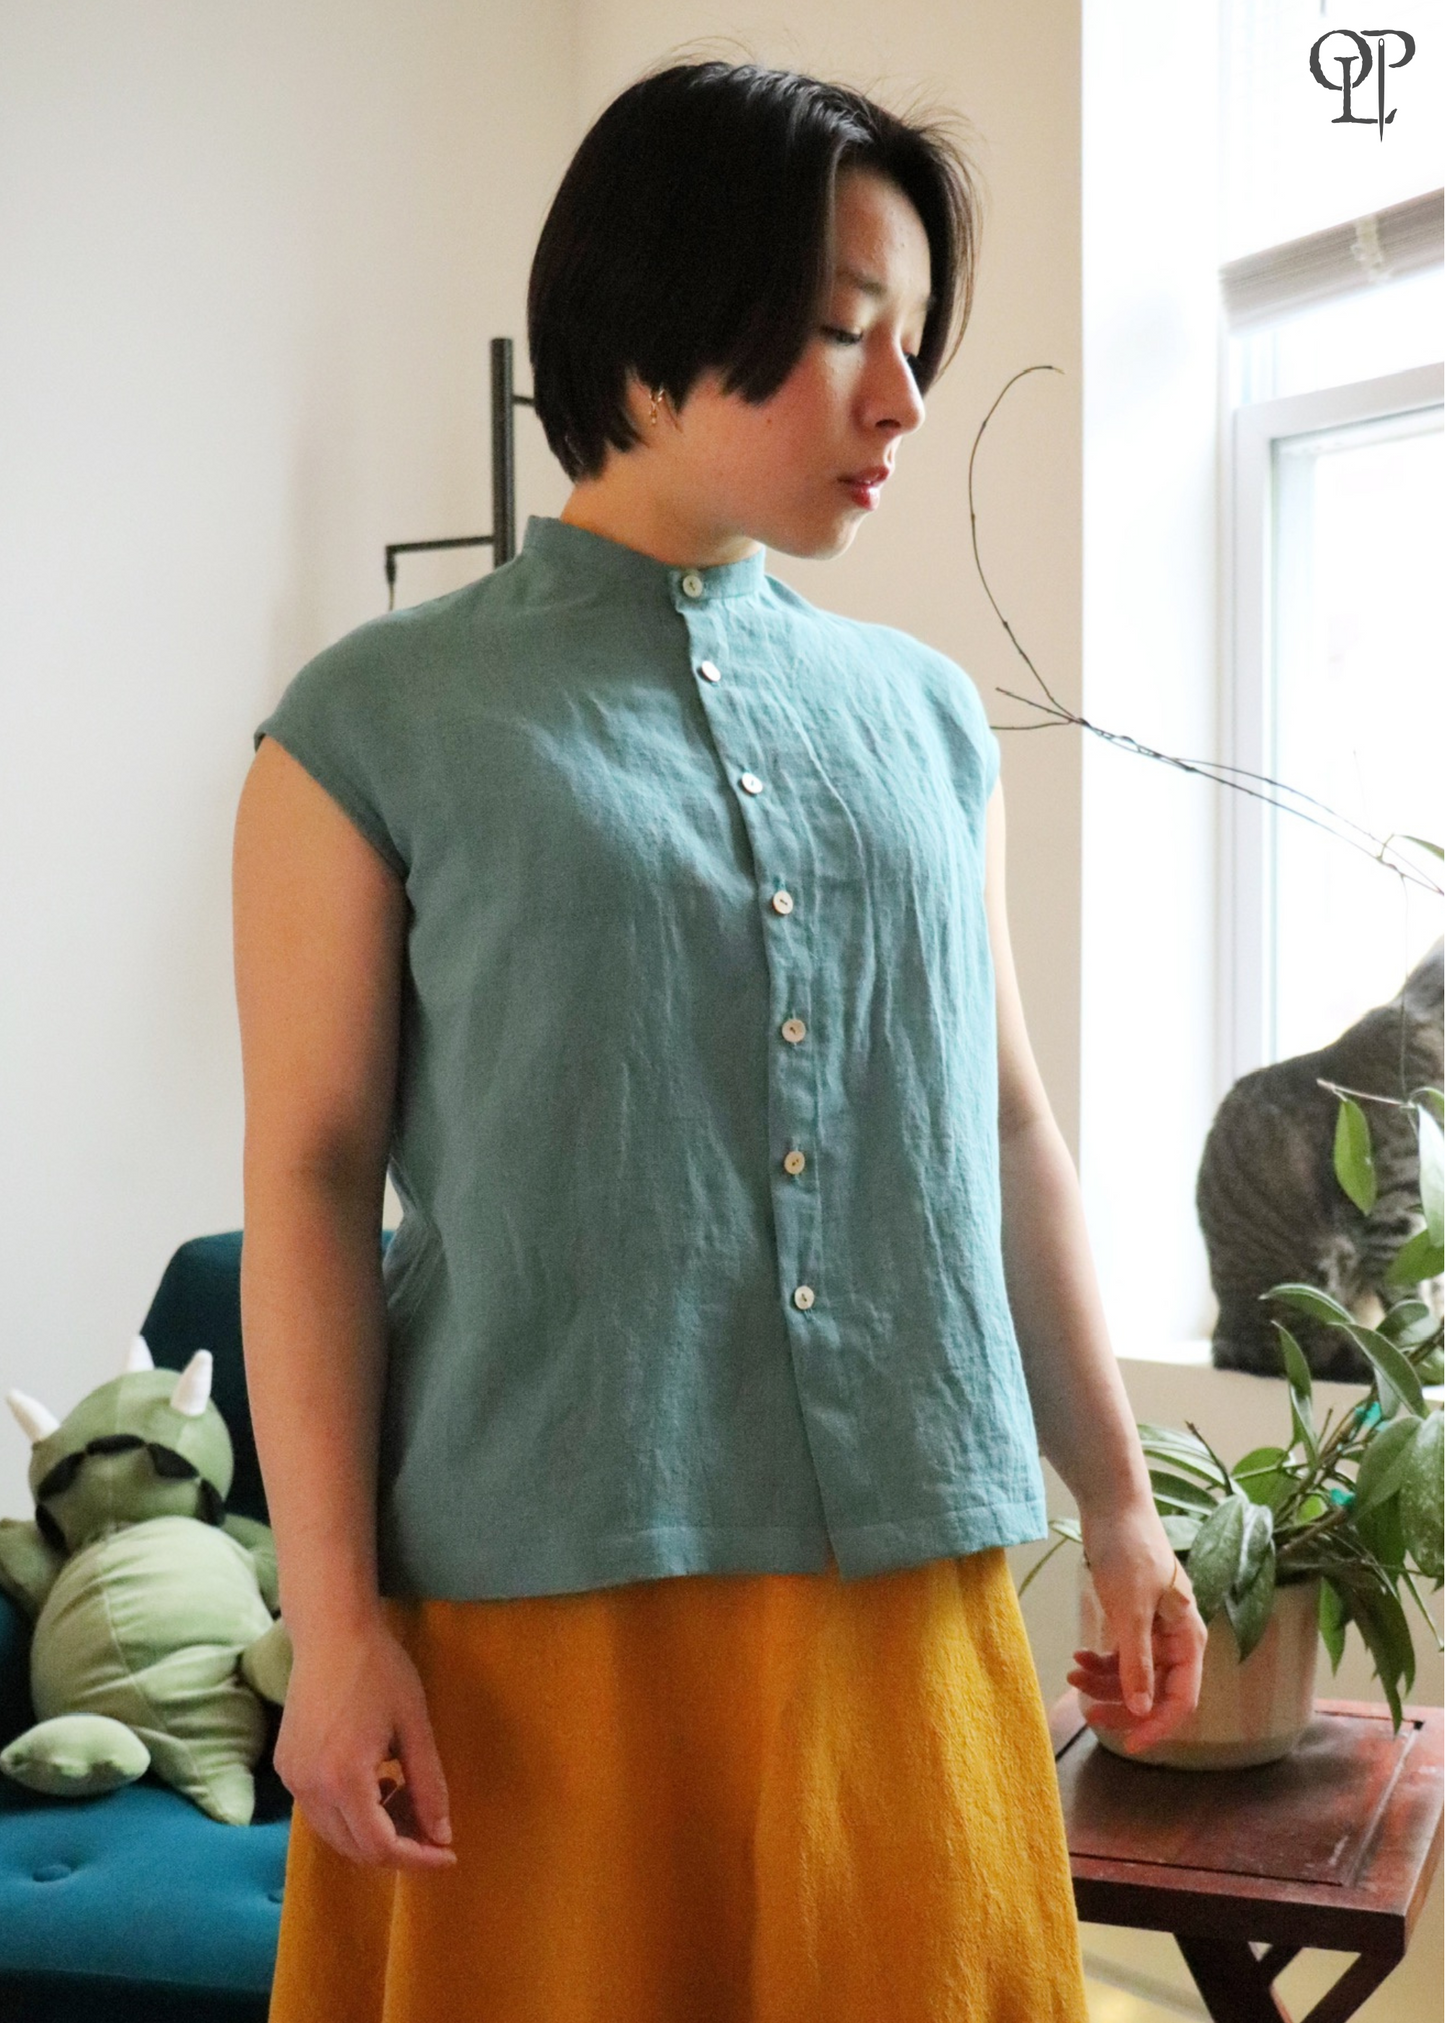 Leah Blouse 1860s Shirt pdf Sewing Pattern